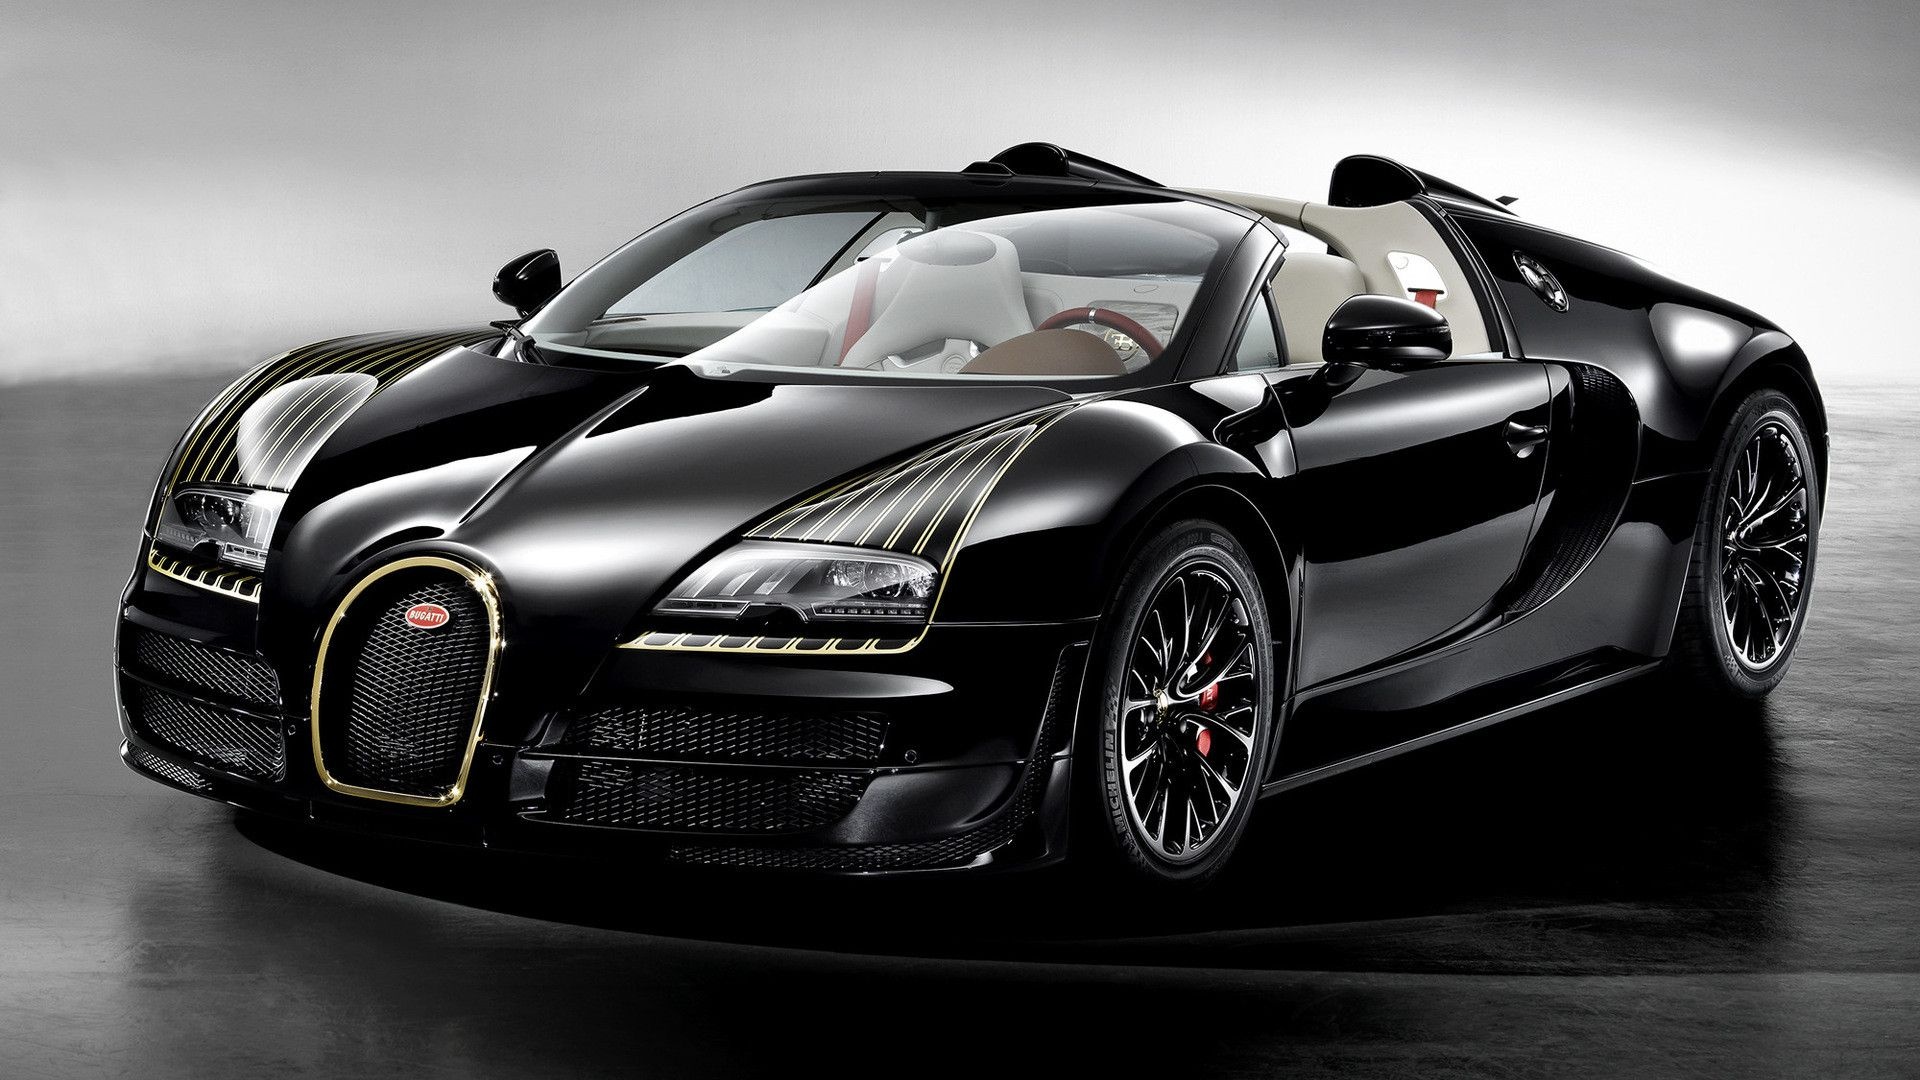 Bugatti Veyron, Black Veyron wallpaper, Exquisite design, Speed and power, 1920x1080 Full HD Desktop